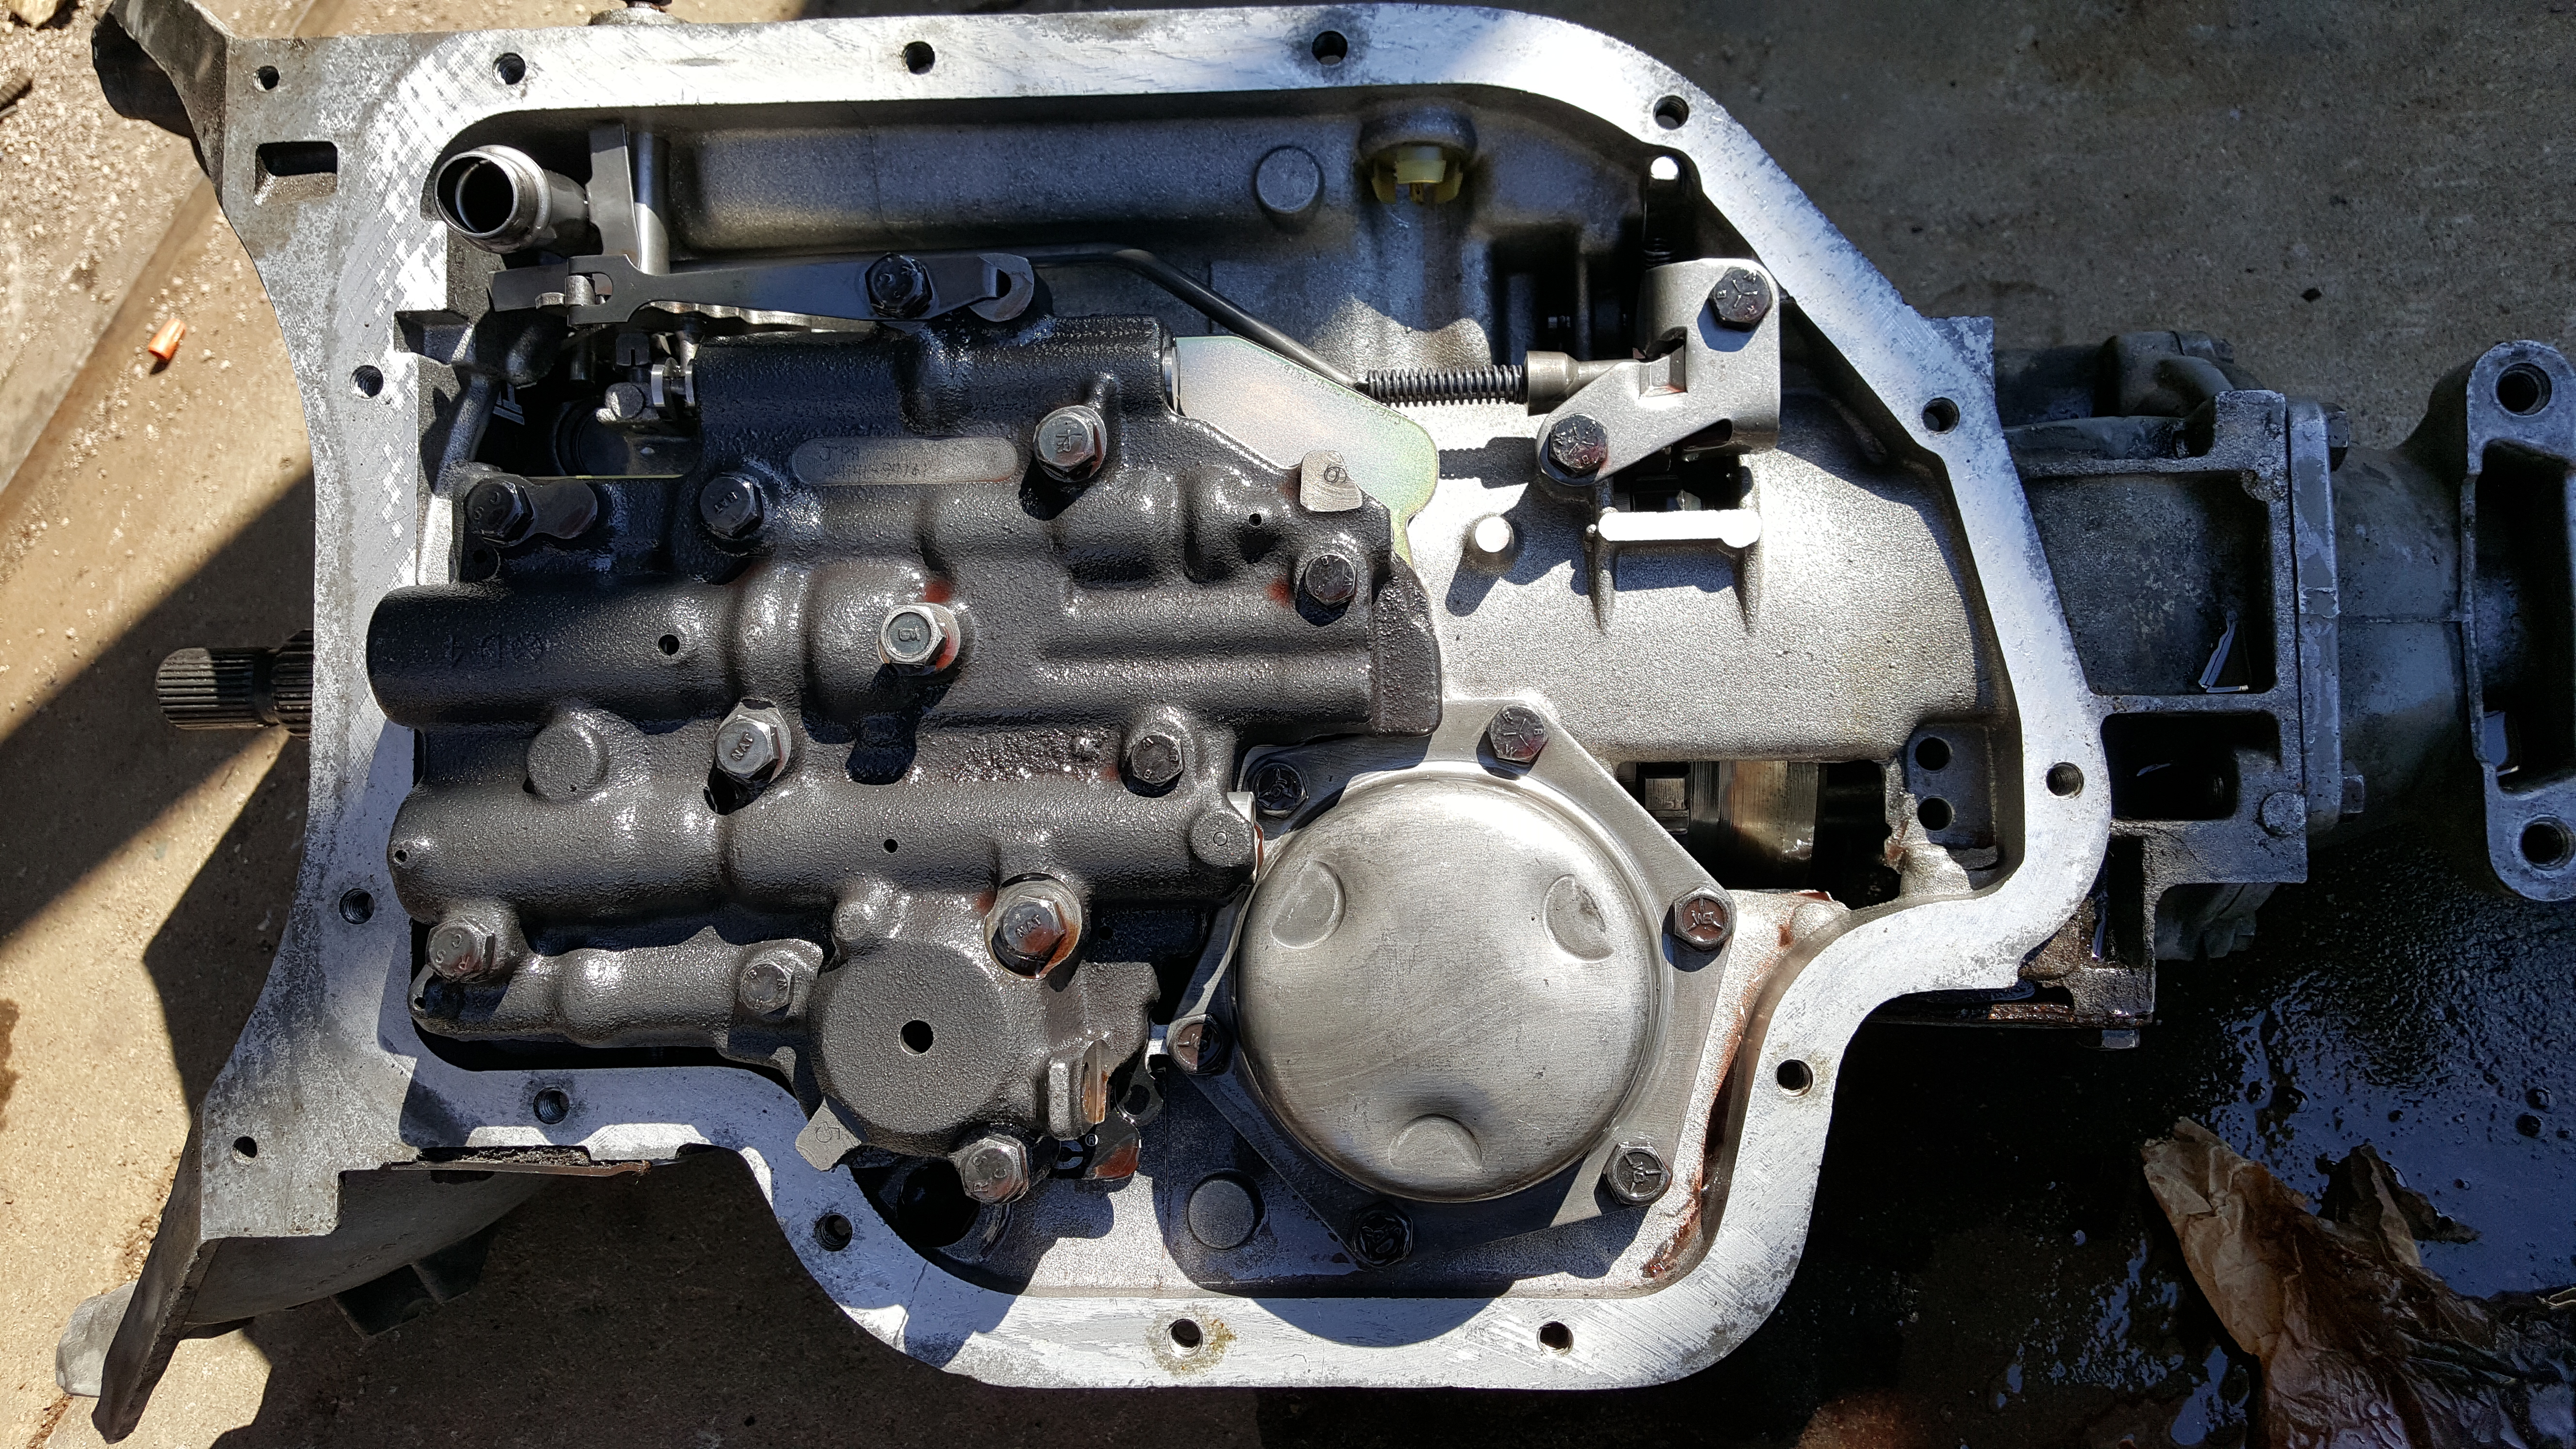 Turbo 400 full manual valve body